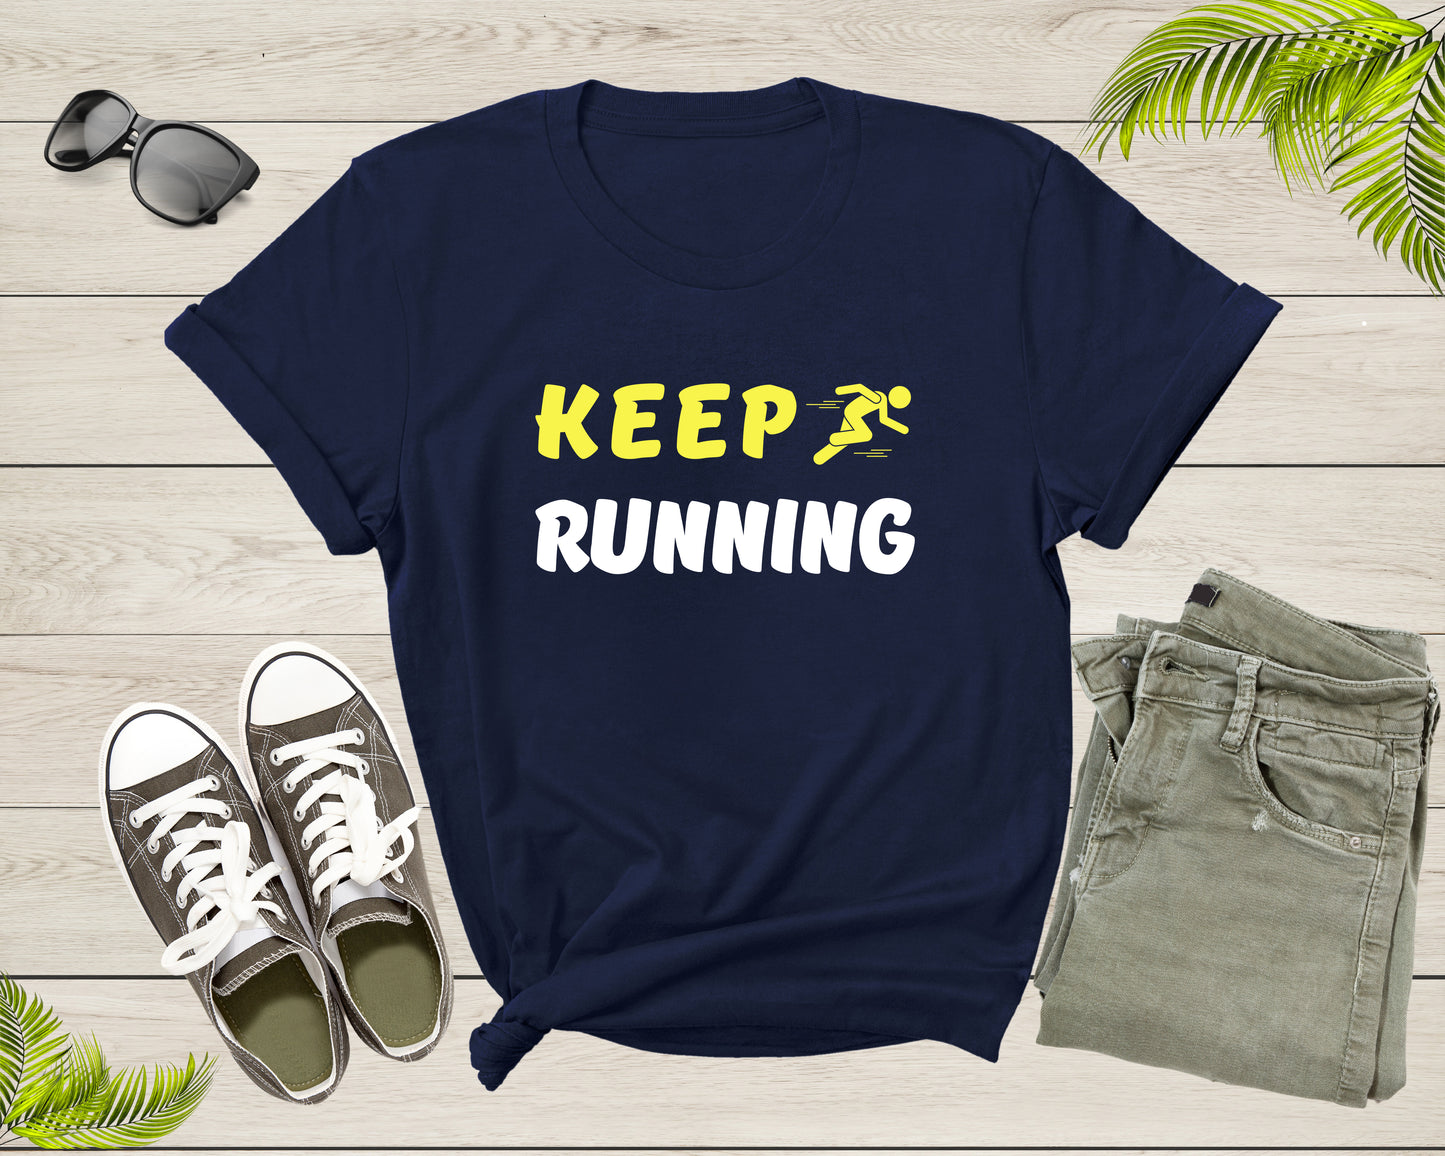 Keep Running Motivational Runner Athlete Marathon Sprinter T-shirt Marathon Runner Shirt Gift For Runner Running Gift Workout Fitness Shirt